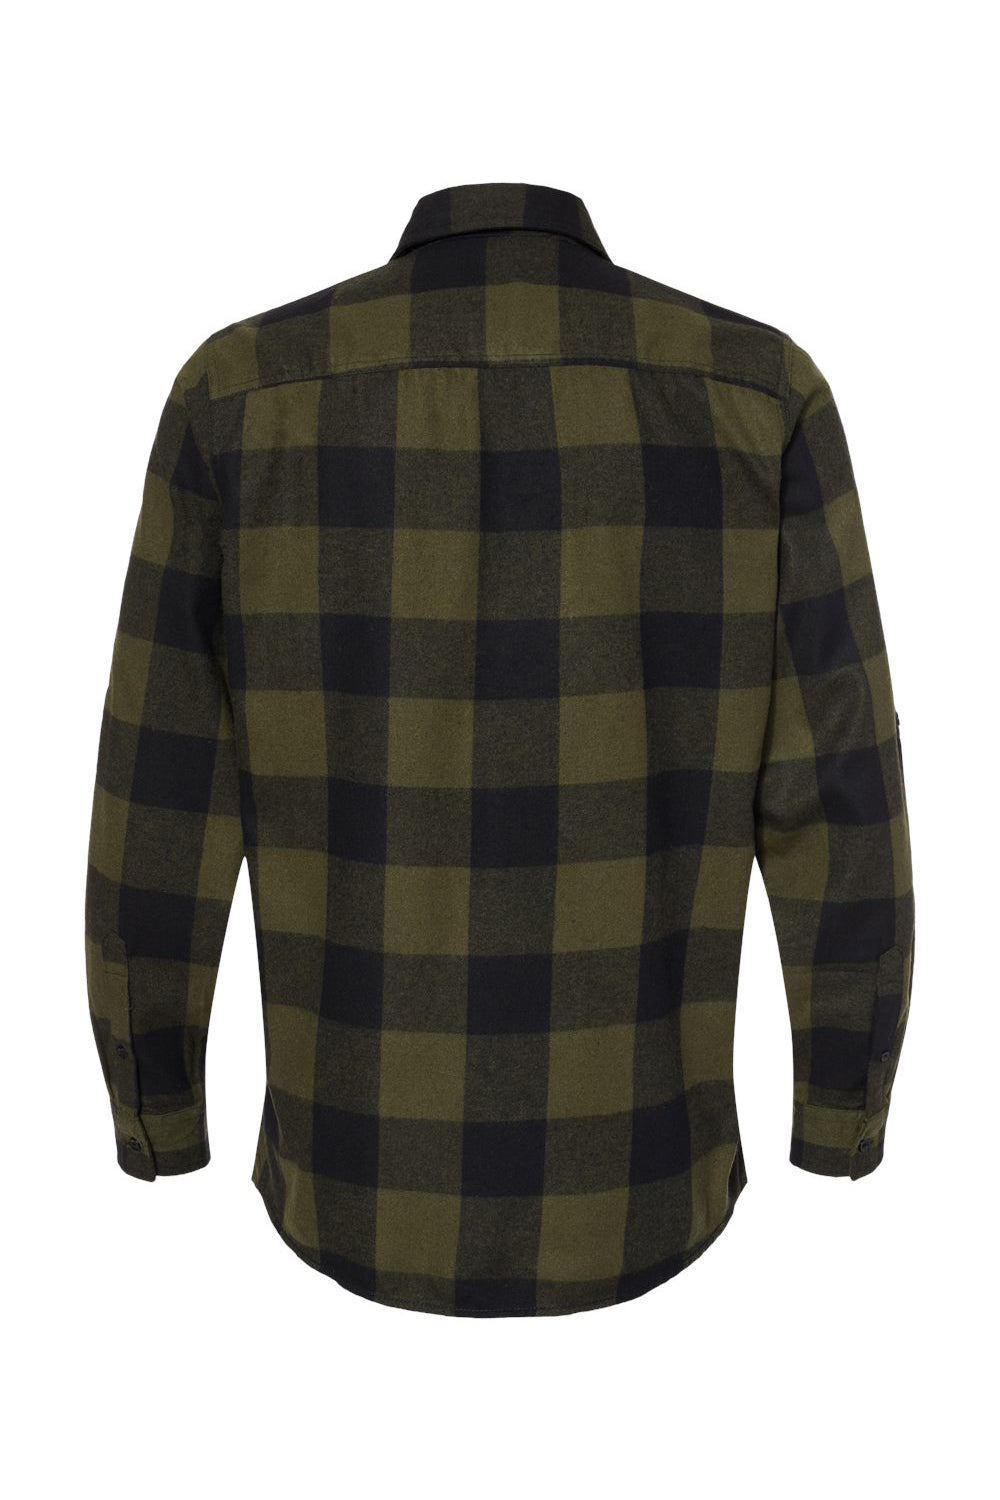 Burnside B8210/8210 Mens Flannel Long Sleeve Button Down Shirt w/ Double Pockets Army Green/Black Flat Back